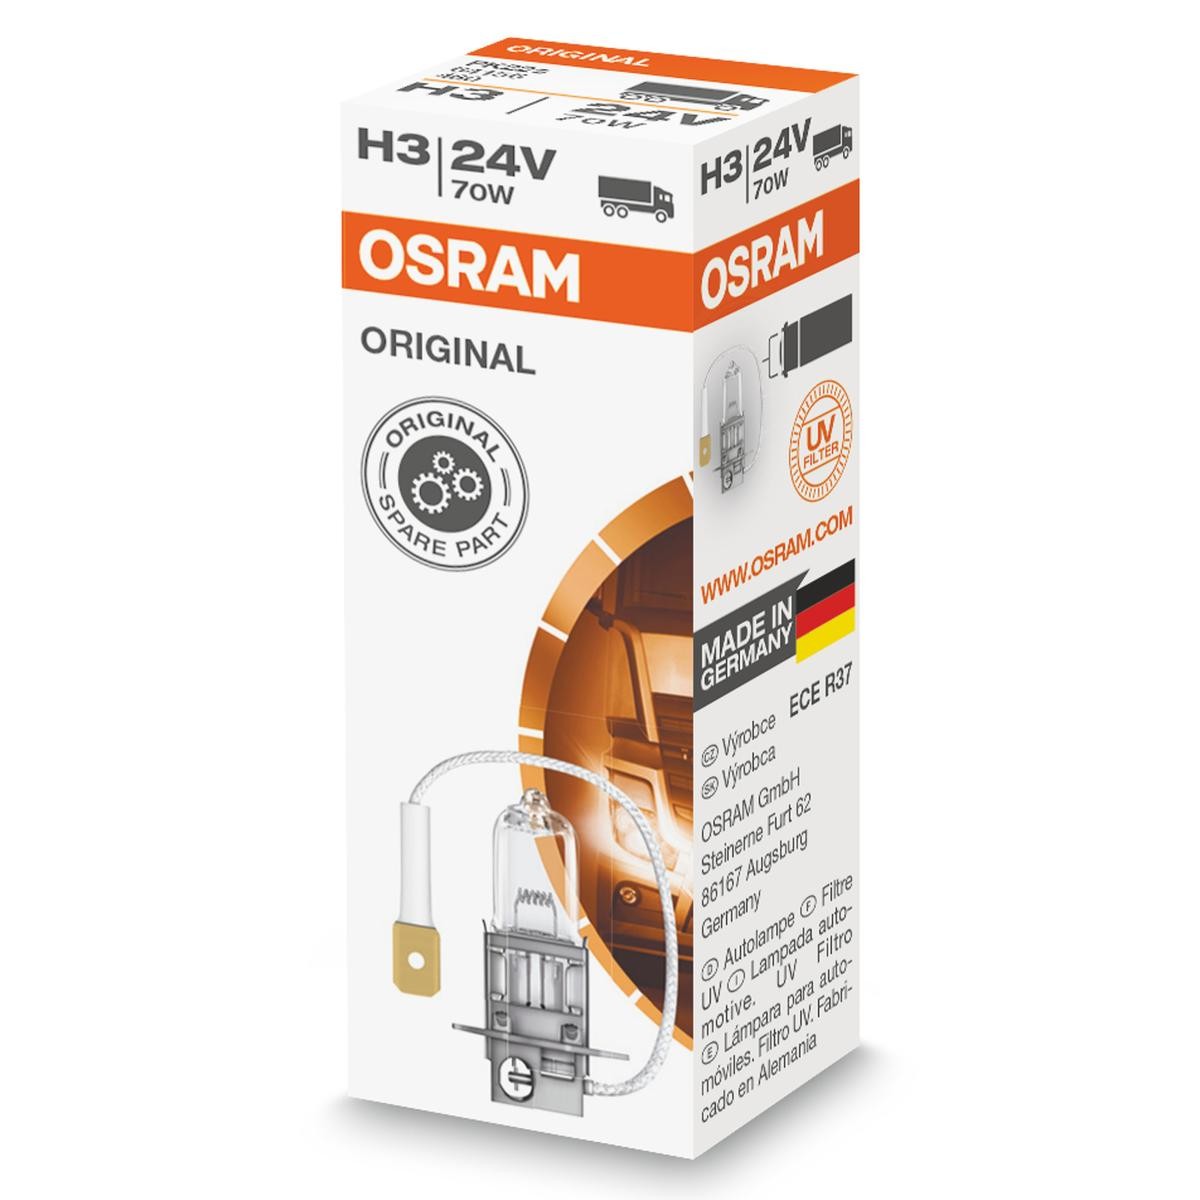 OSRAM ORIGINAL 64156 High beam bulb H3 24V 70W3200K Halogen